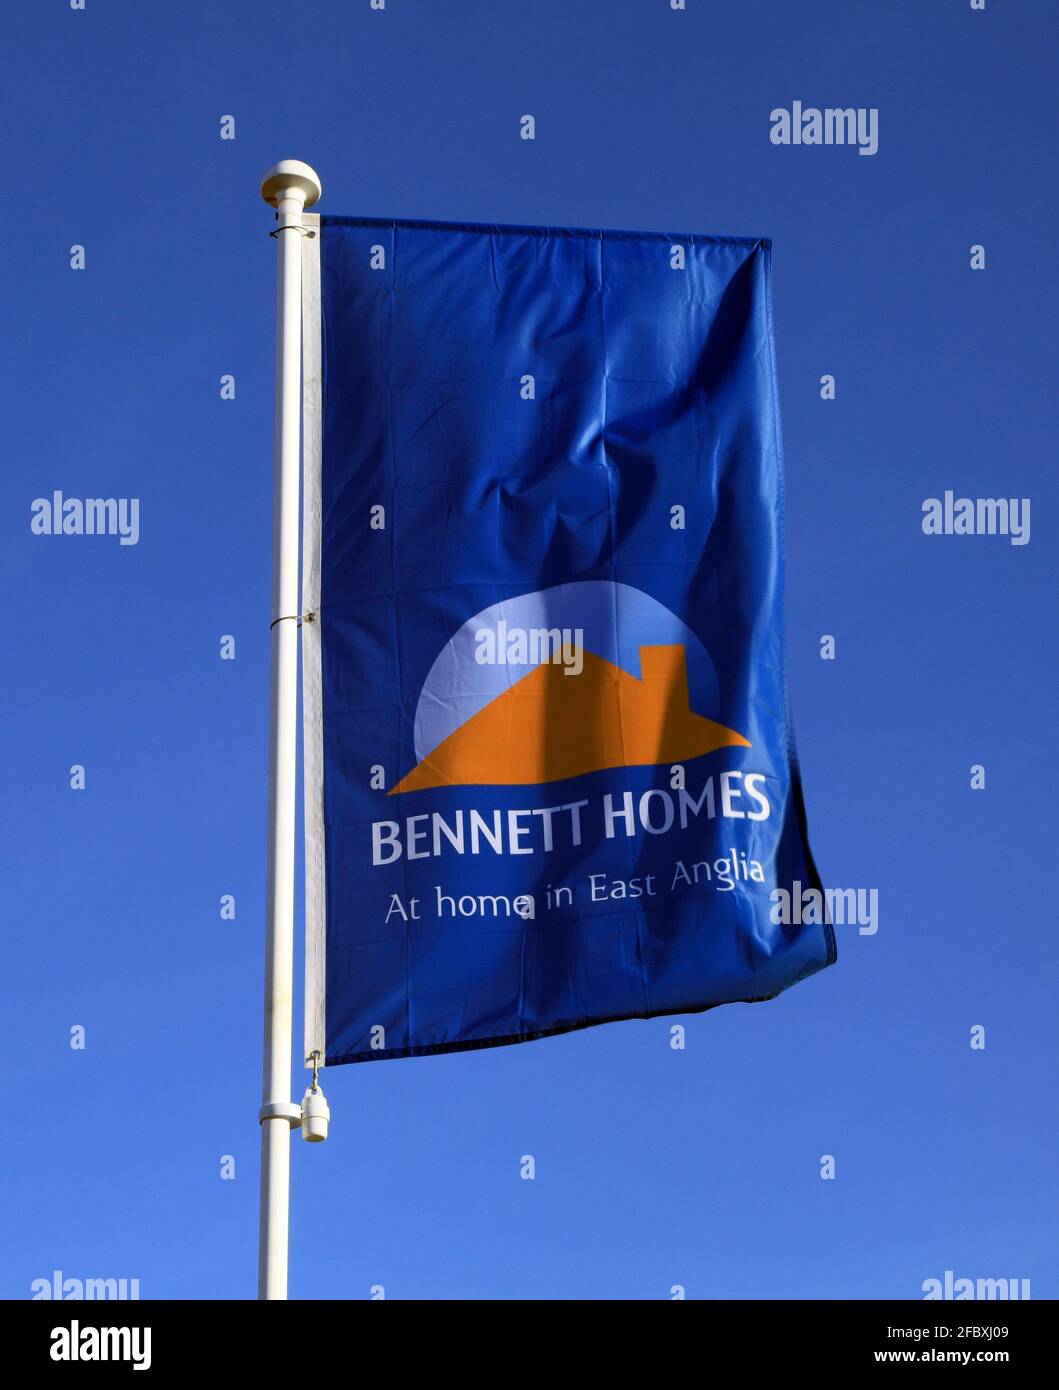 Bennett Homes, At home in East Anglia, banner, flag, Hunstanton, Norfolk, England Stock Photo